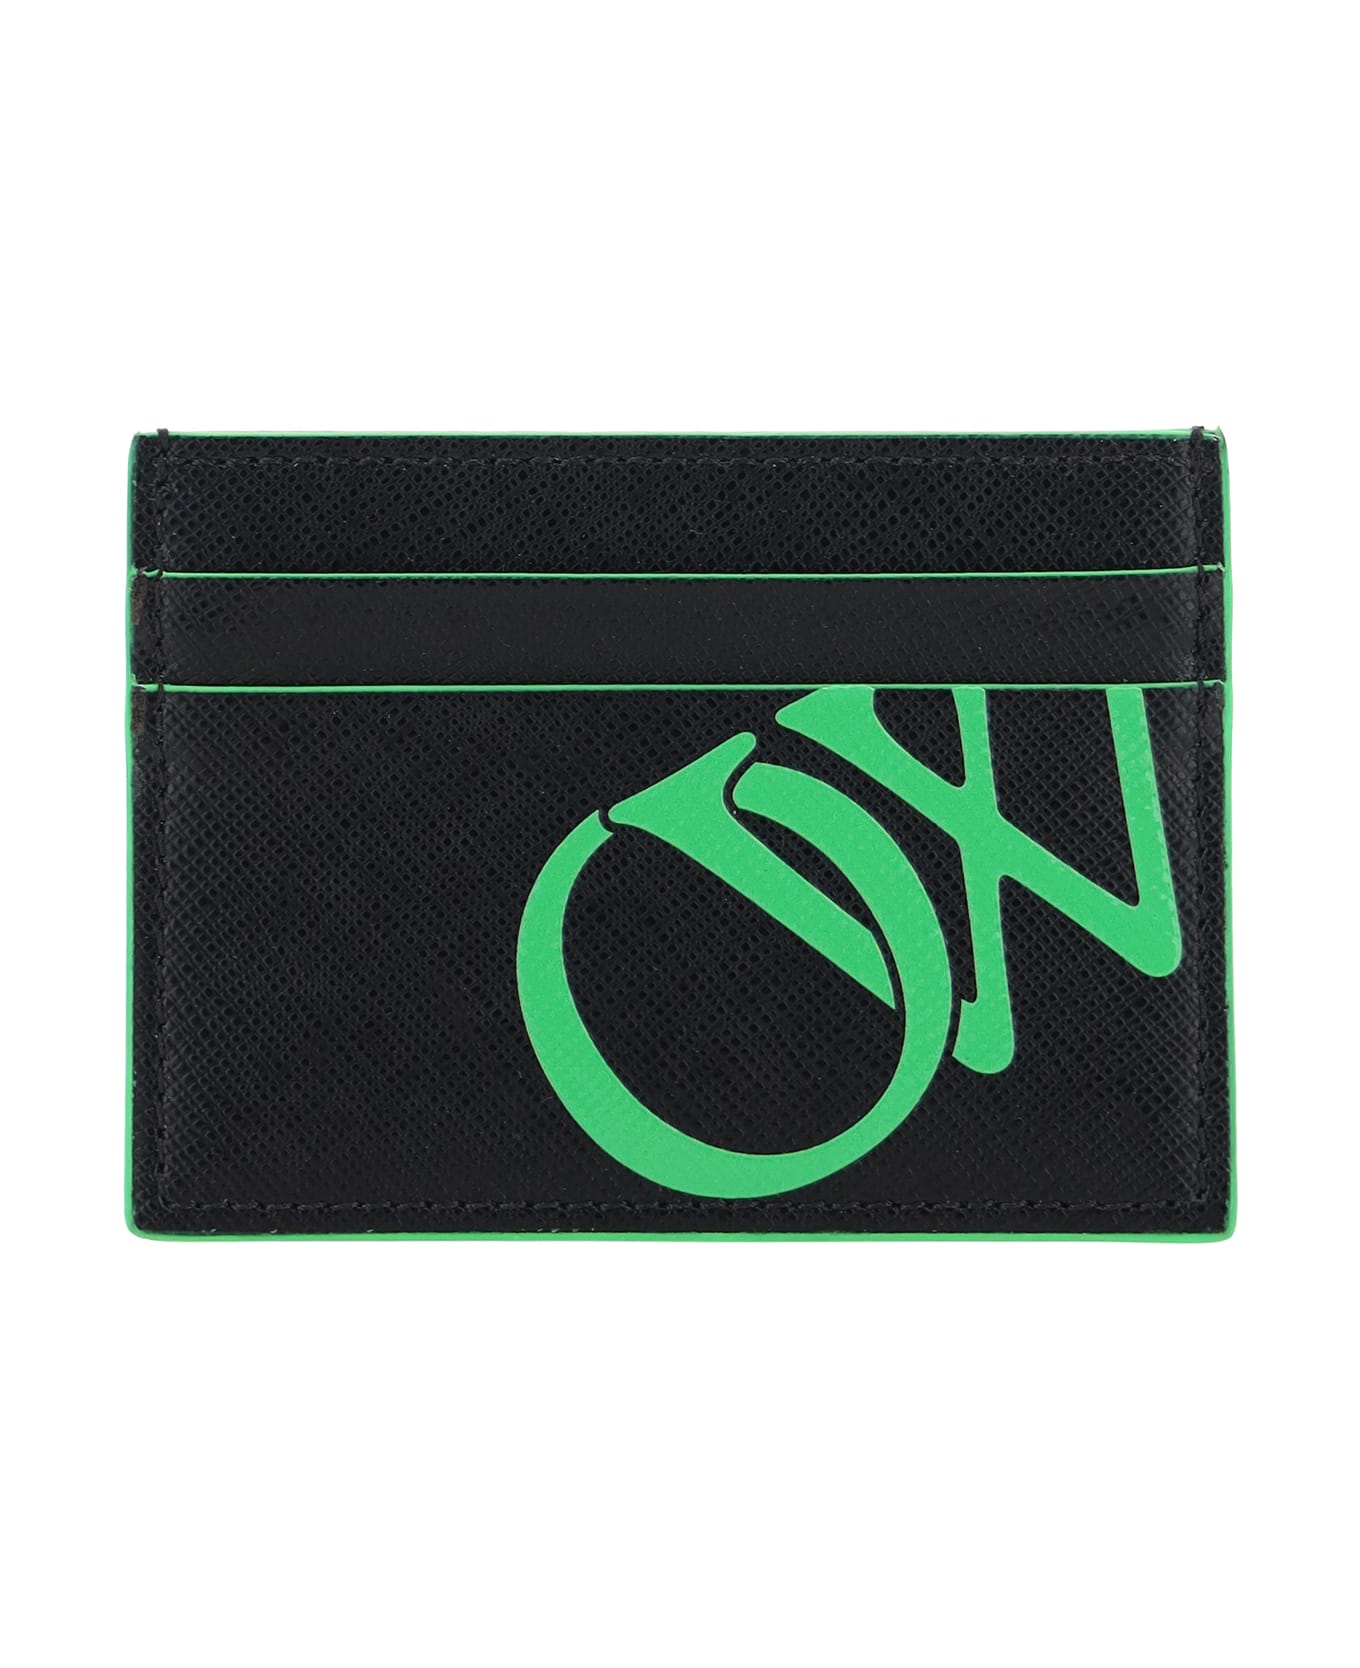 Off-White Card Holder - Black Green Fluo 財布